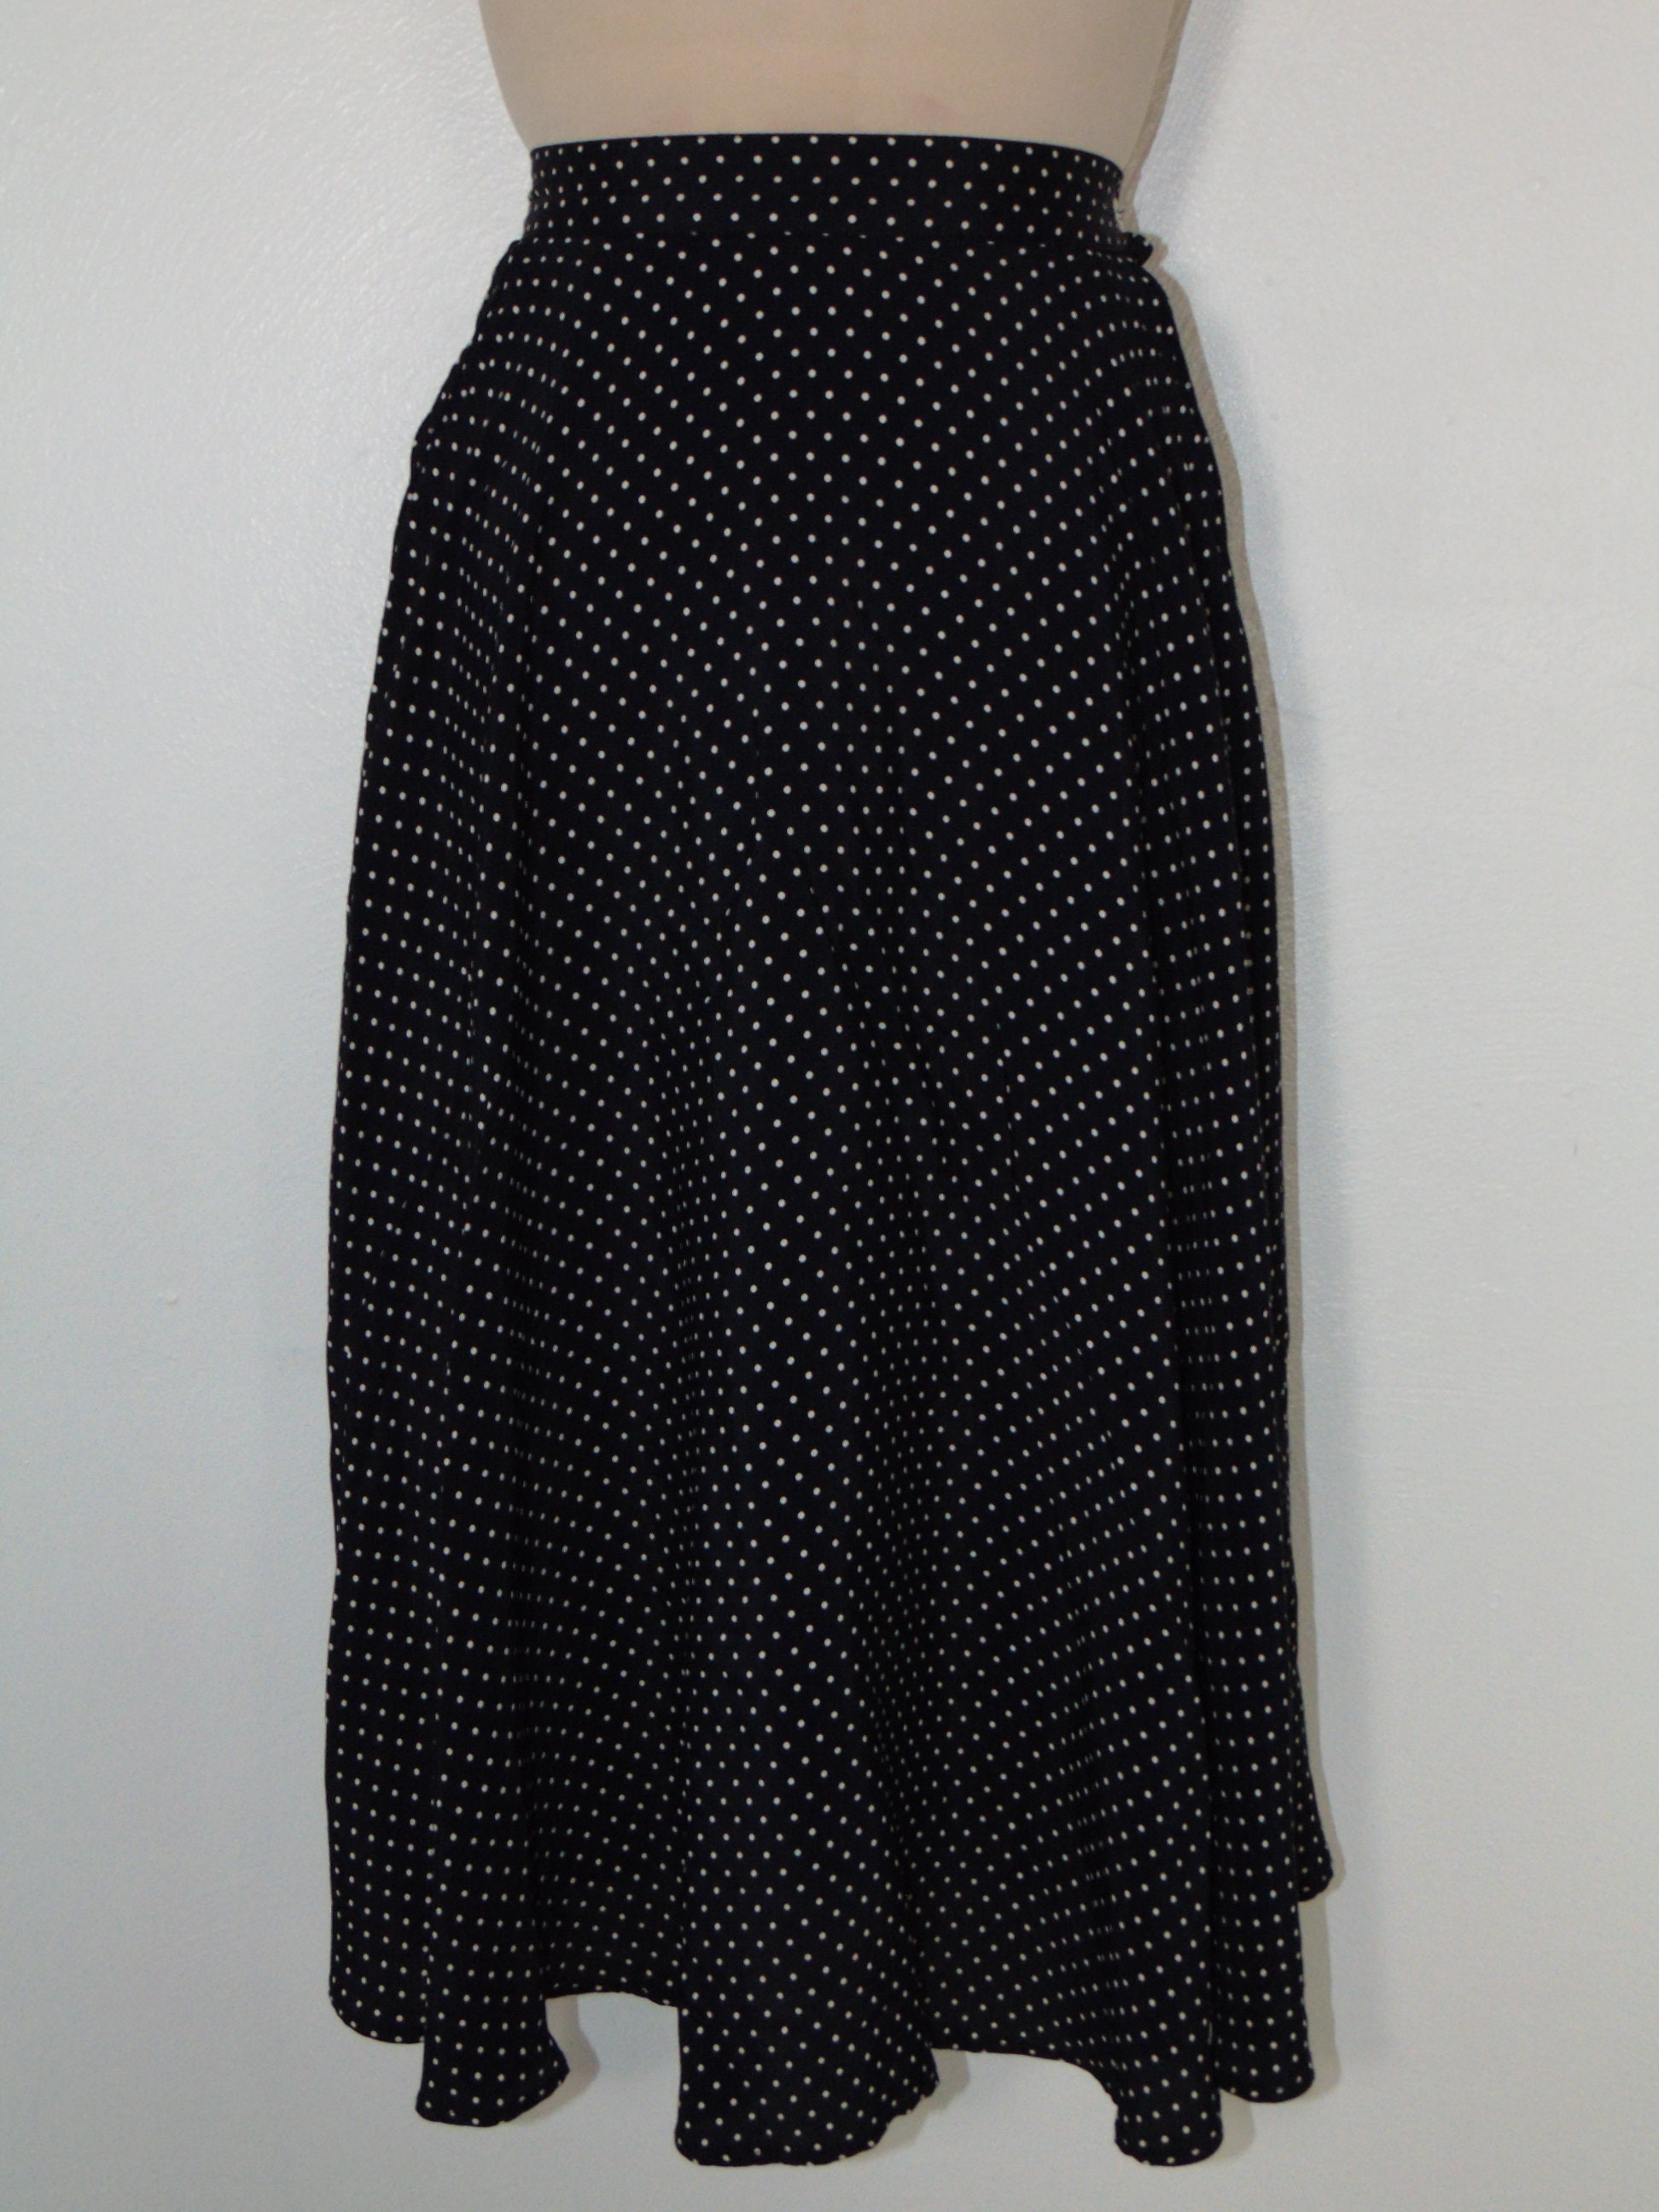 Vintage black white polka dot skirt 100% rayon pockets below | Etsy